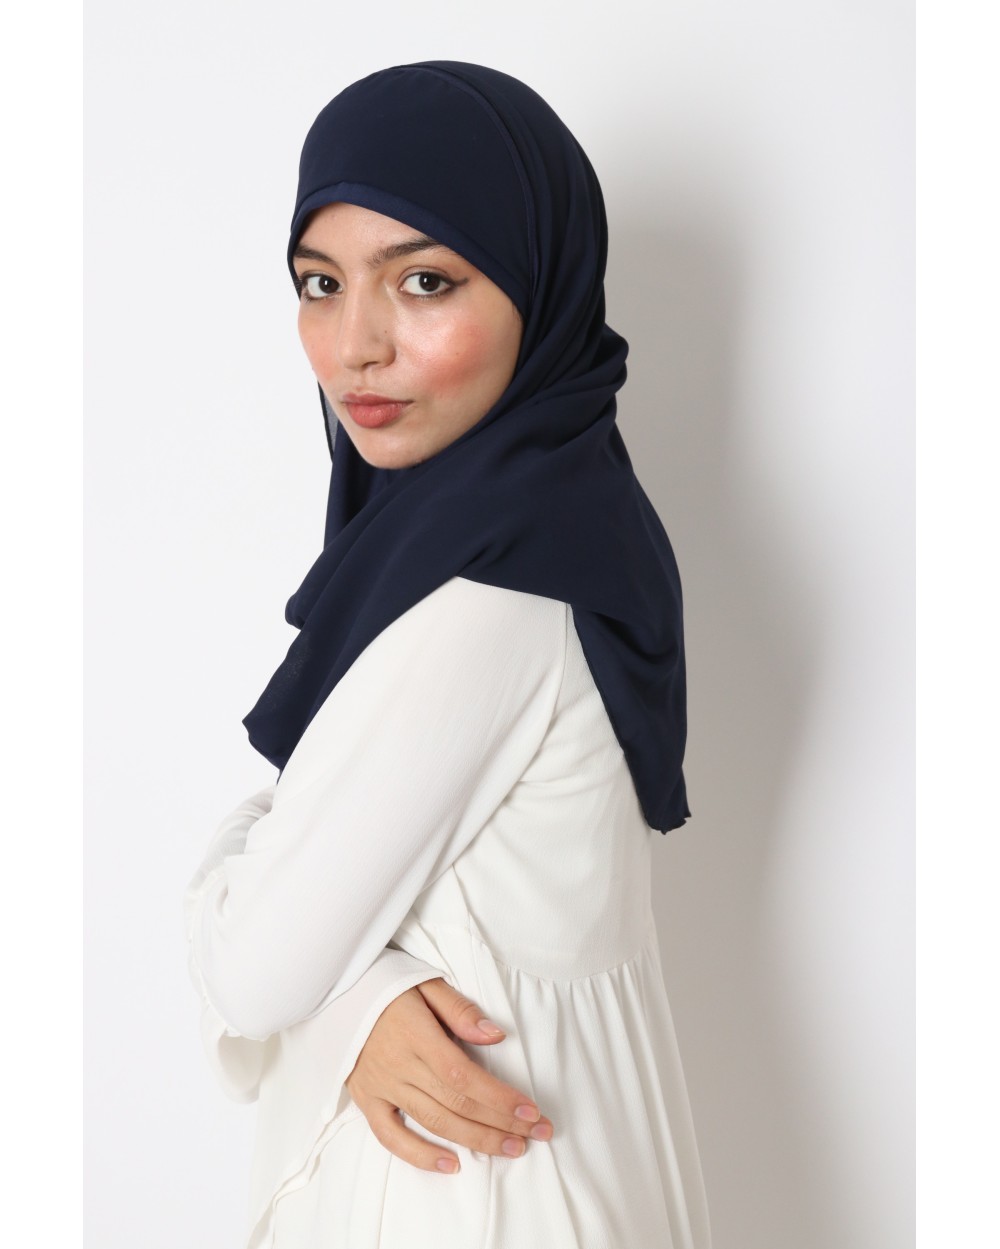 Zeinah Hijab to put on